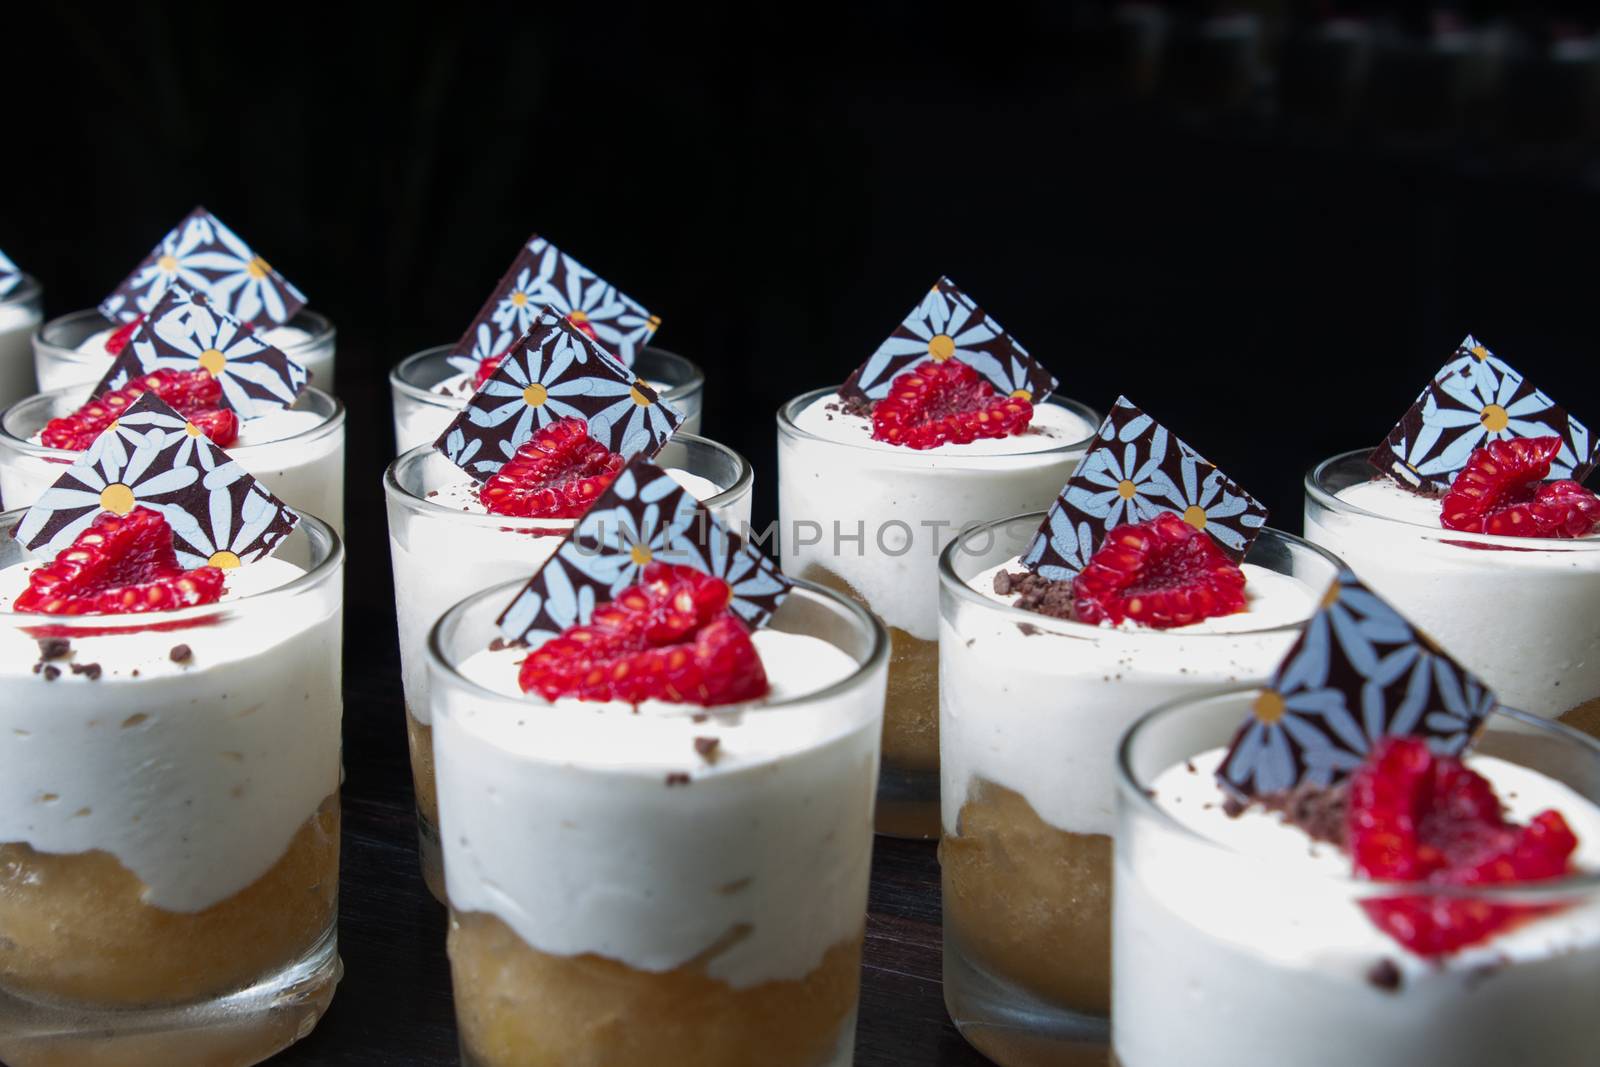 stack of desert sweet cakes with frozen yogurt  raspberry and chocolate